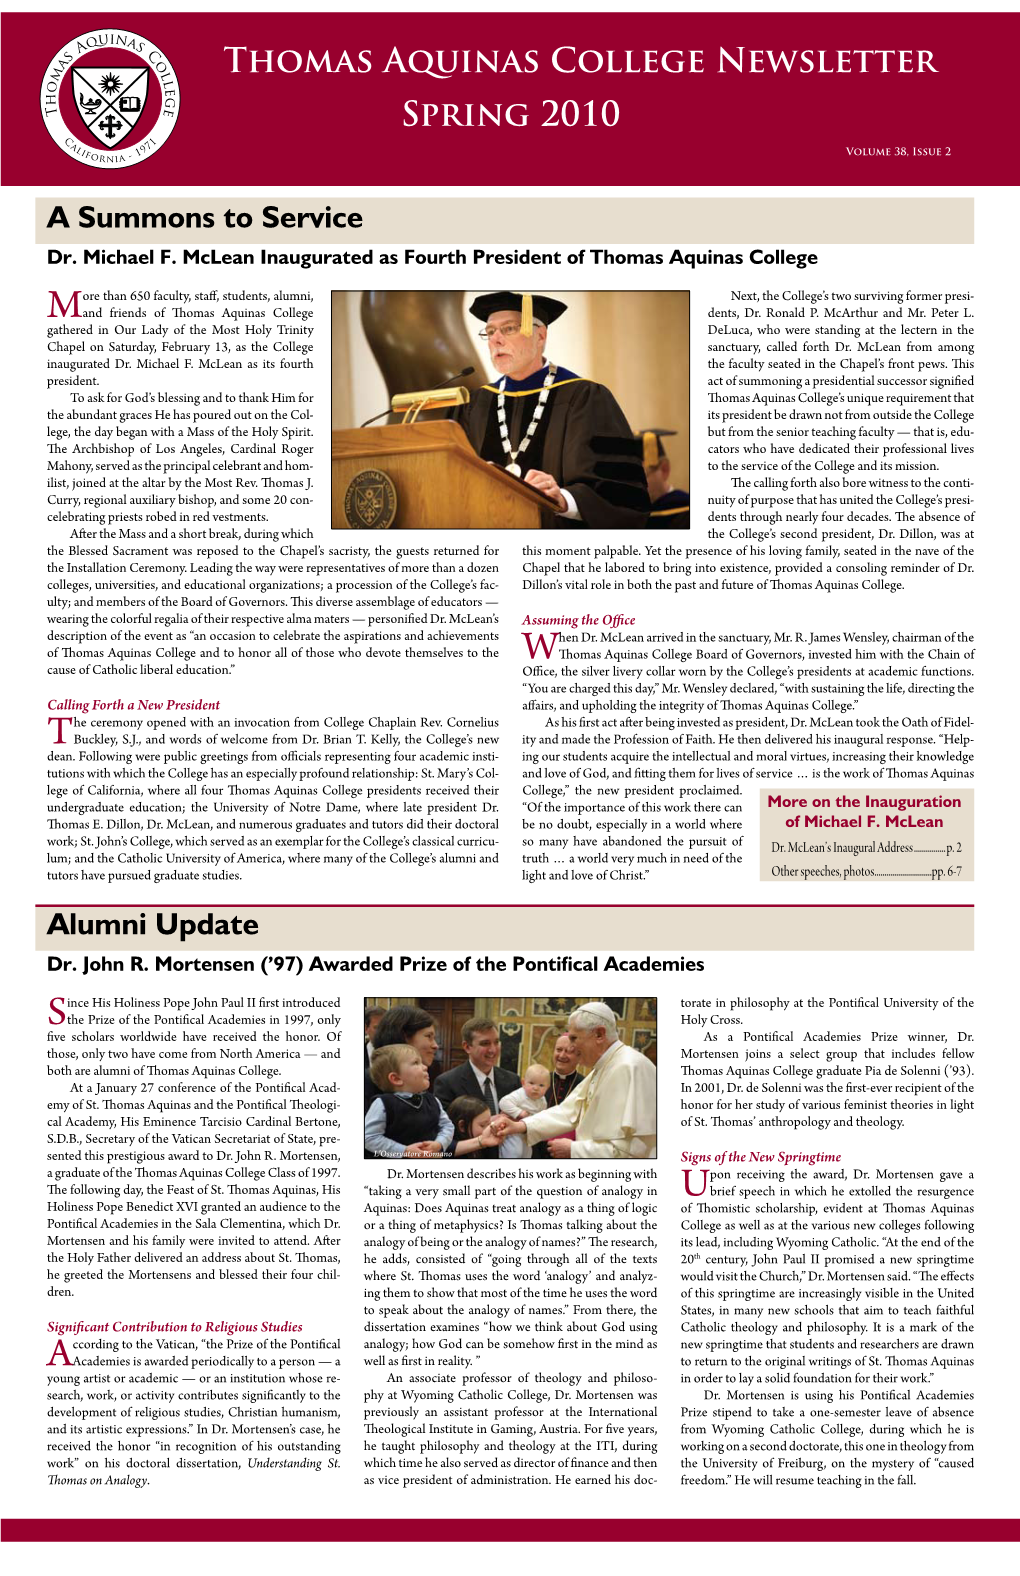 Thomas Aquinas College Newsletter Spring 2010